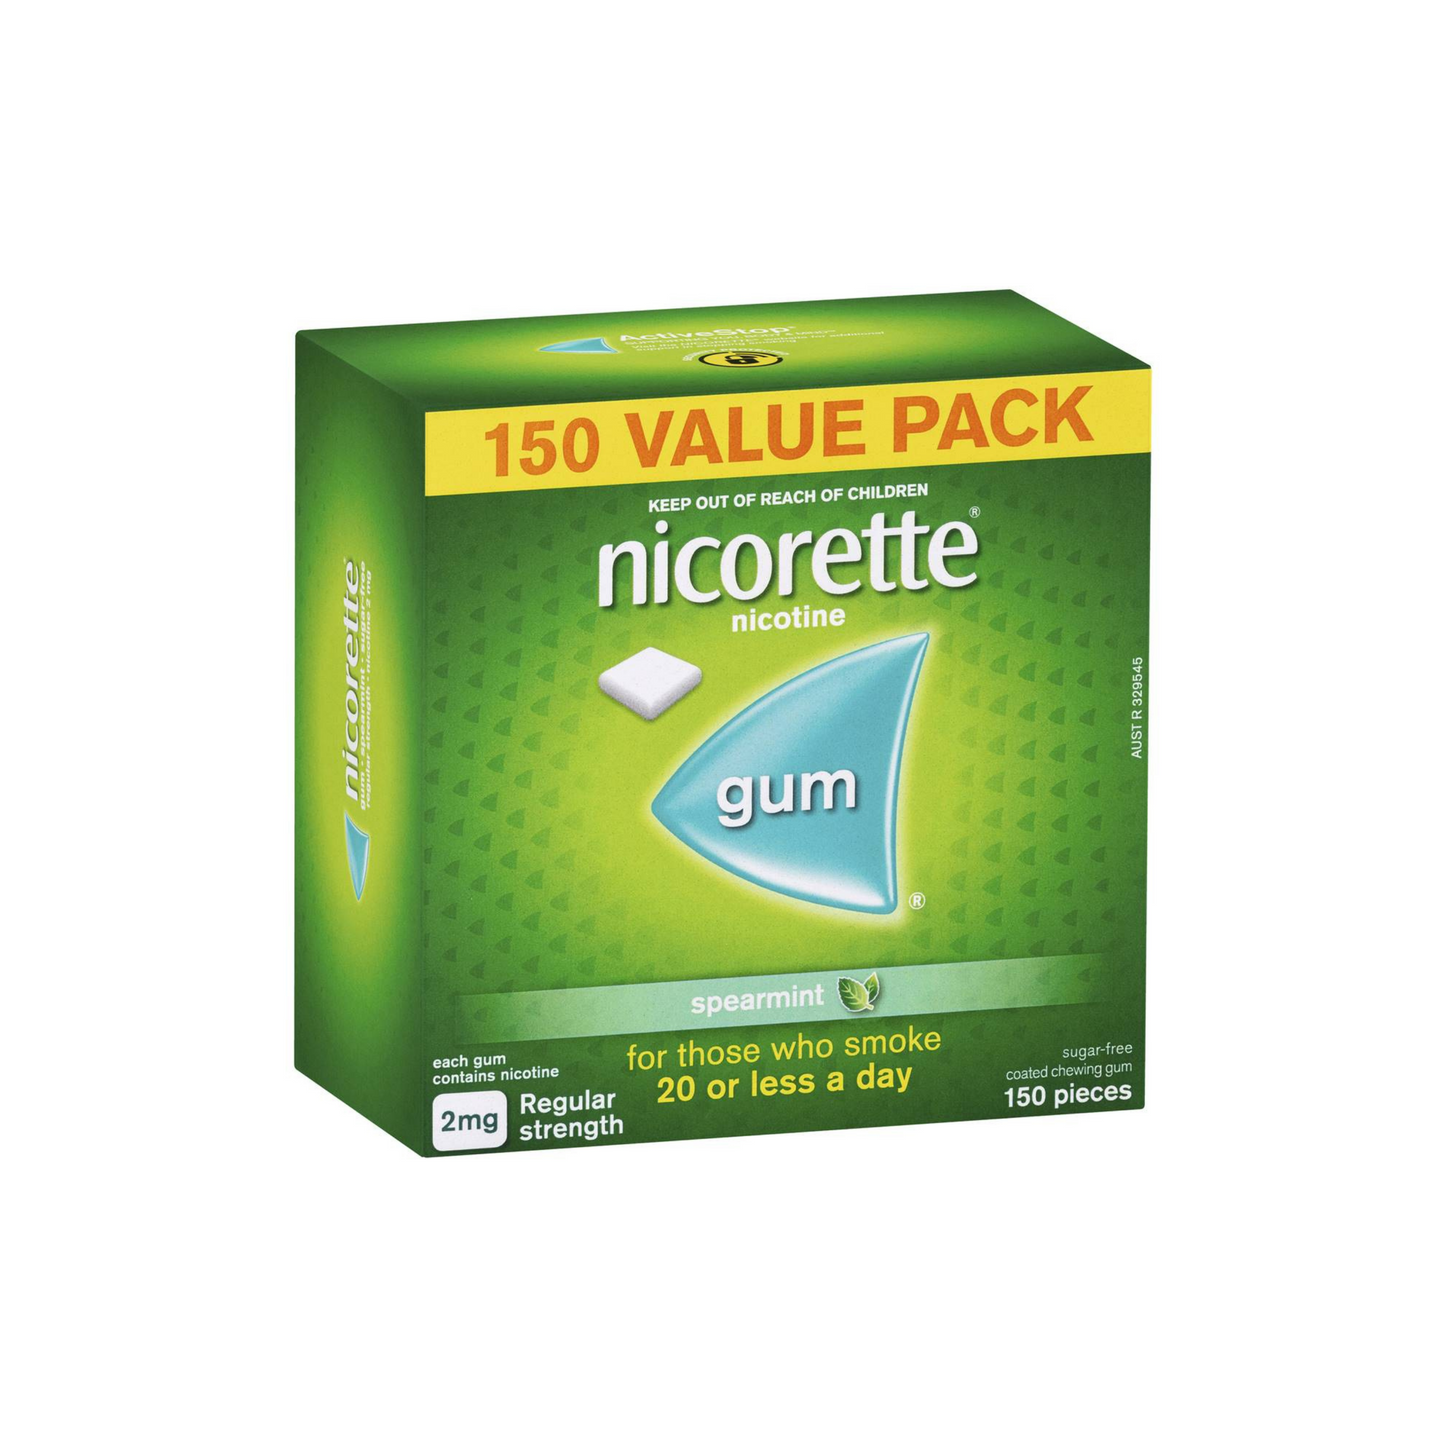 Nicorette Quit Smoking Gum 2mg Regular Strength Spearmint (150 pack)